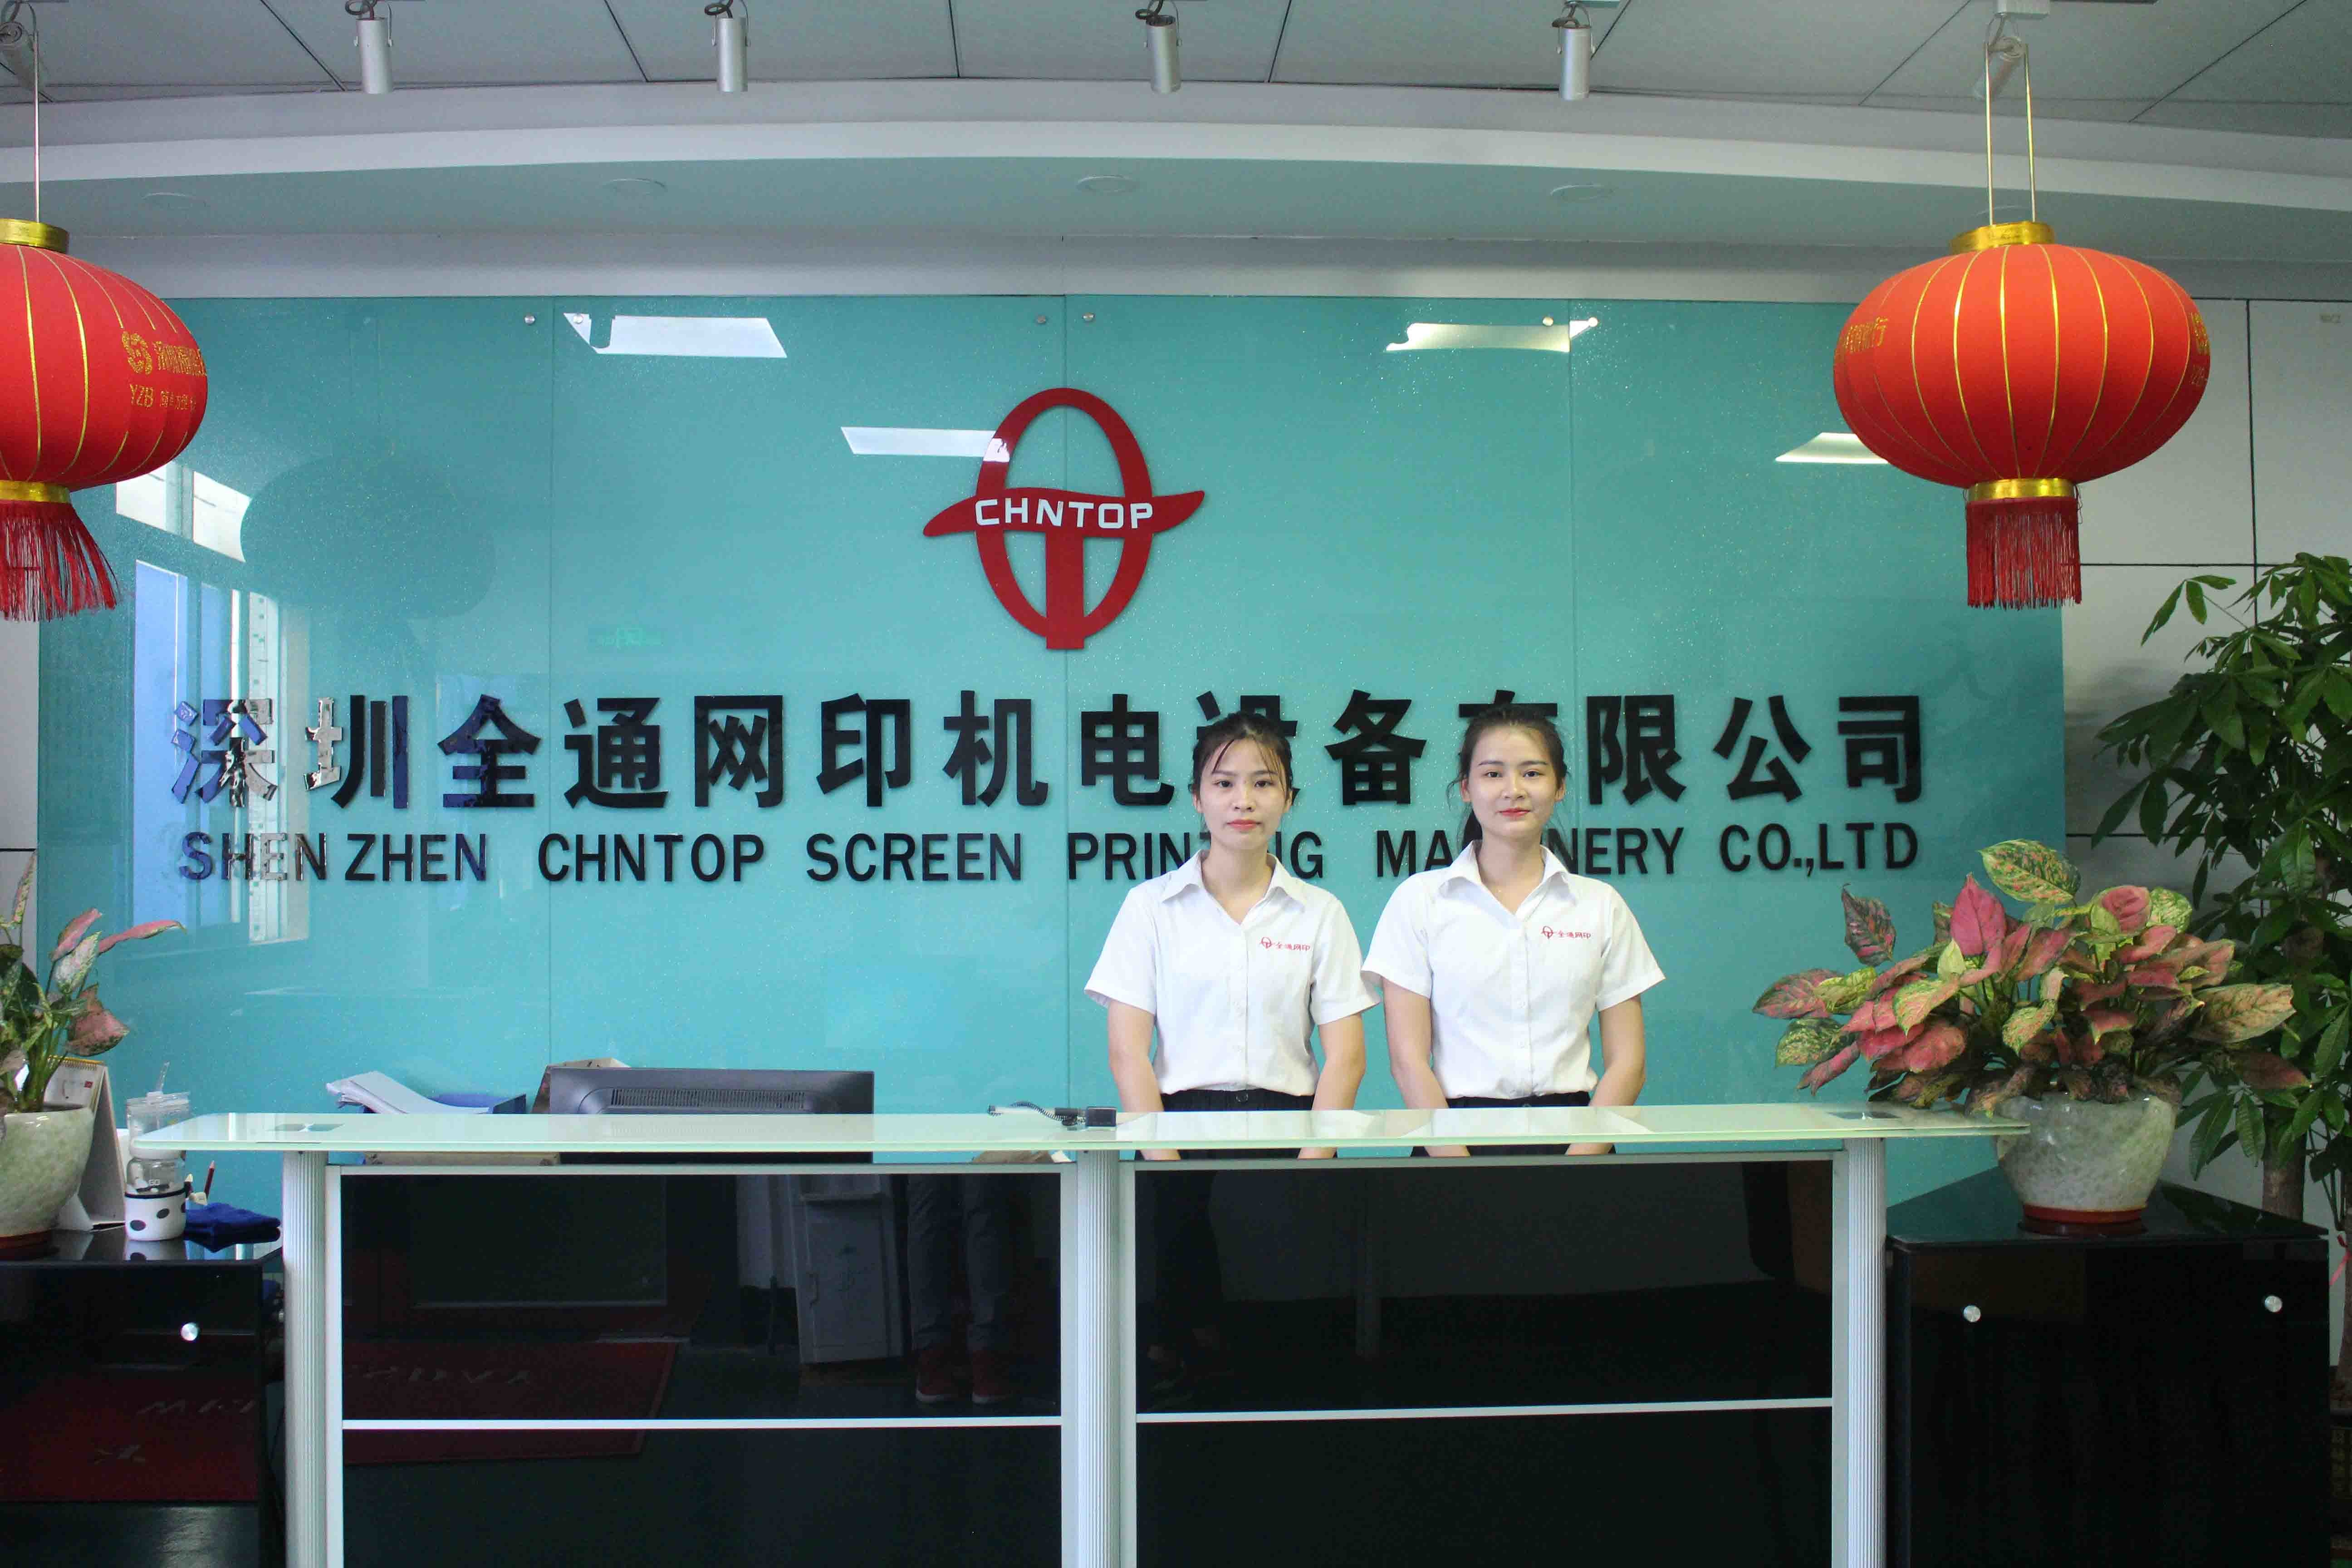 Shenzhen CHNTOP Screen Printing Machinery Co., Ltd